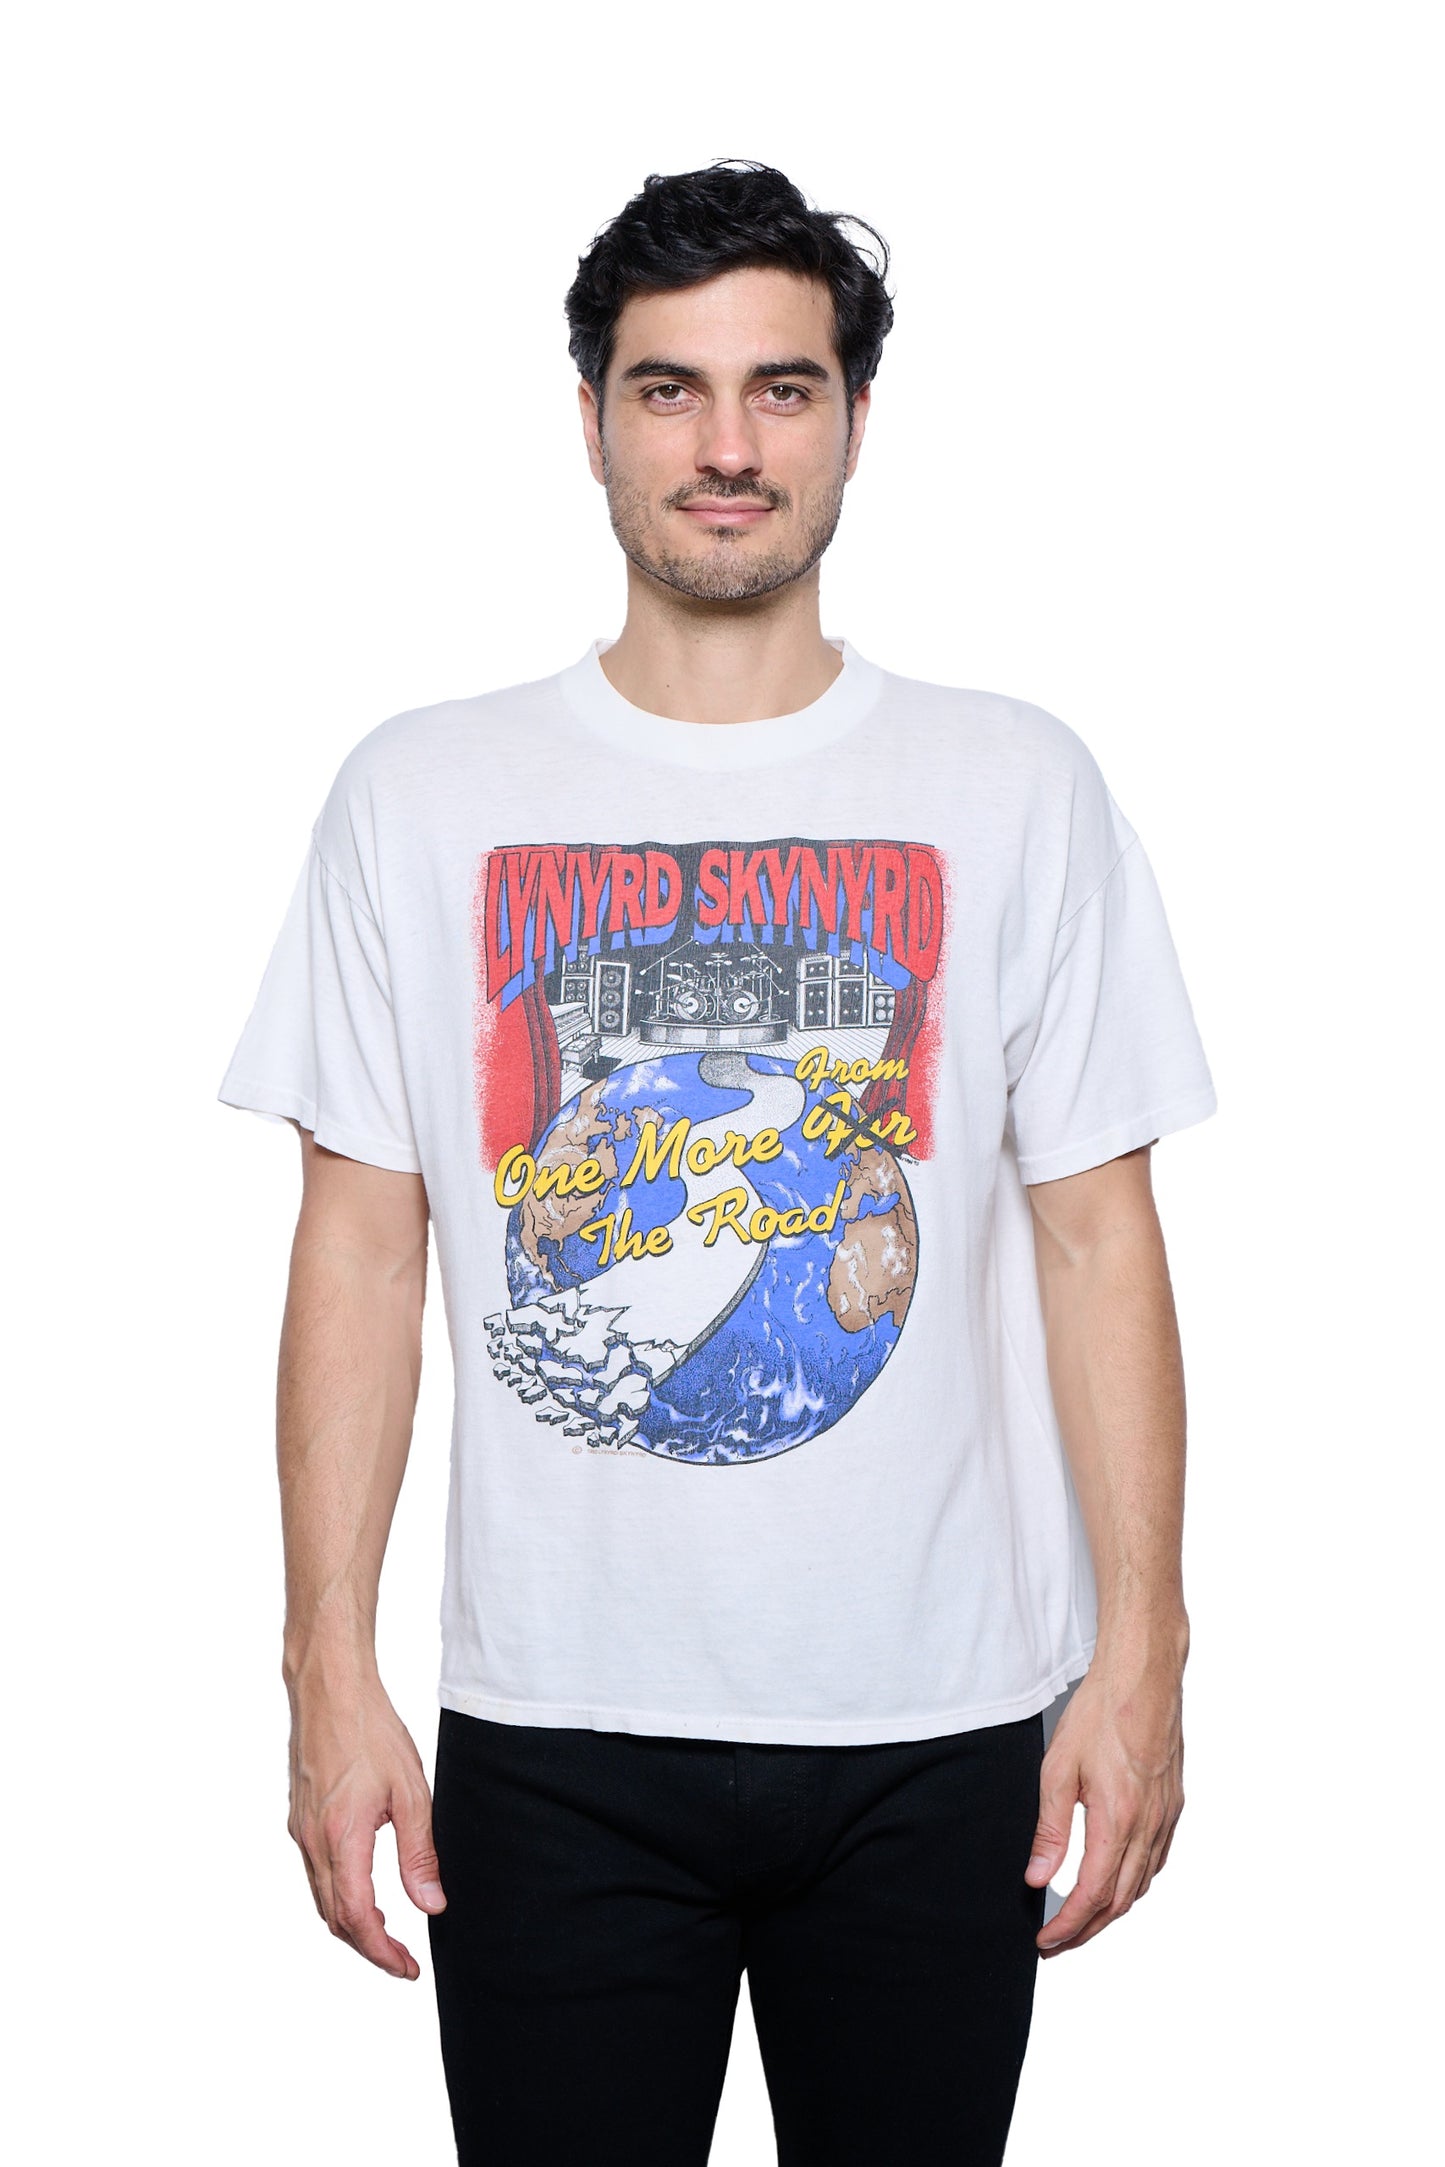 Vintage 1993 Lynyrd Skynyrd Tour T-Shirt